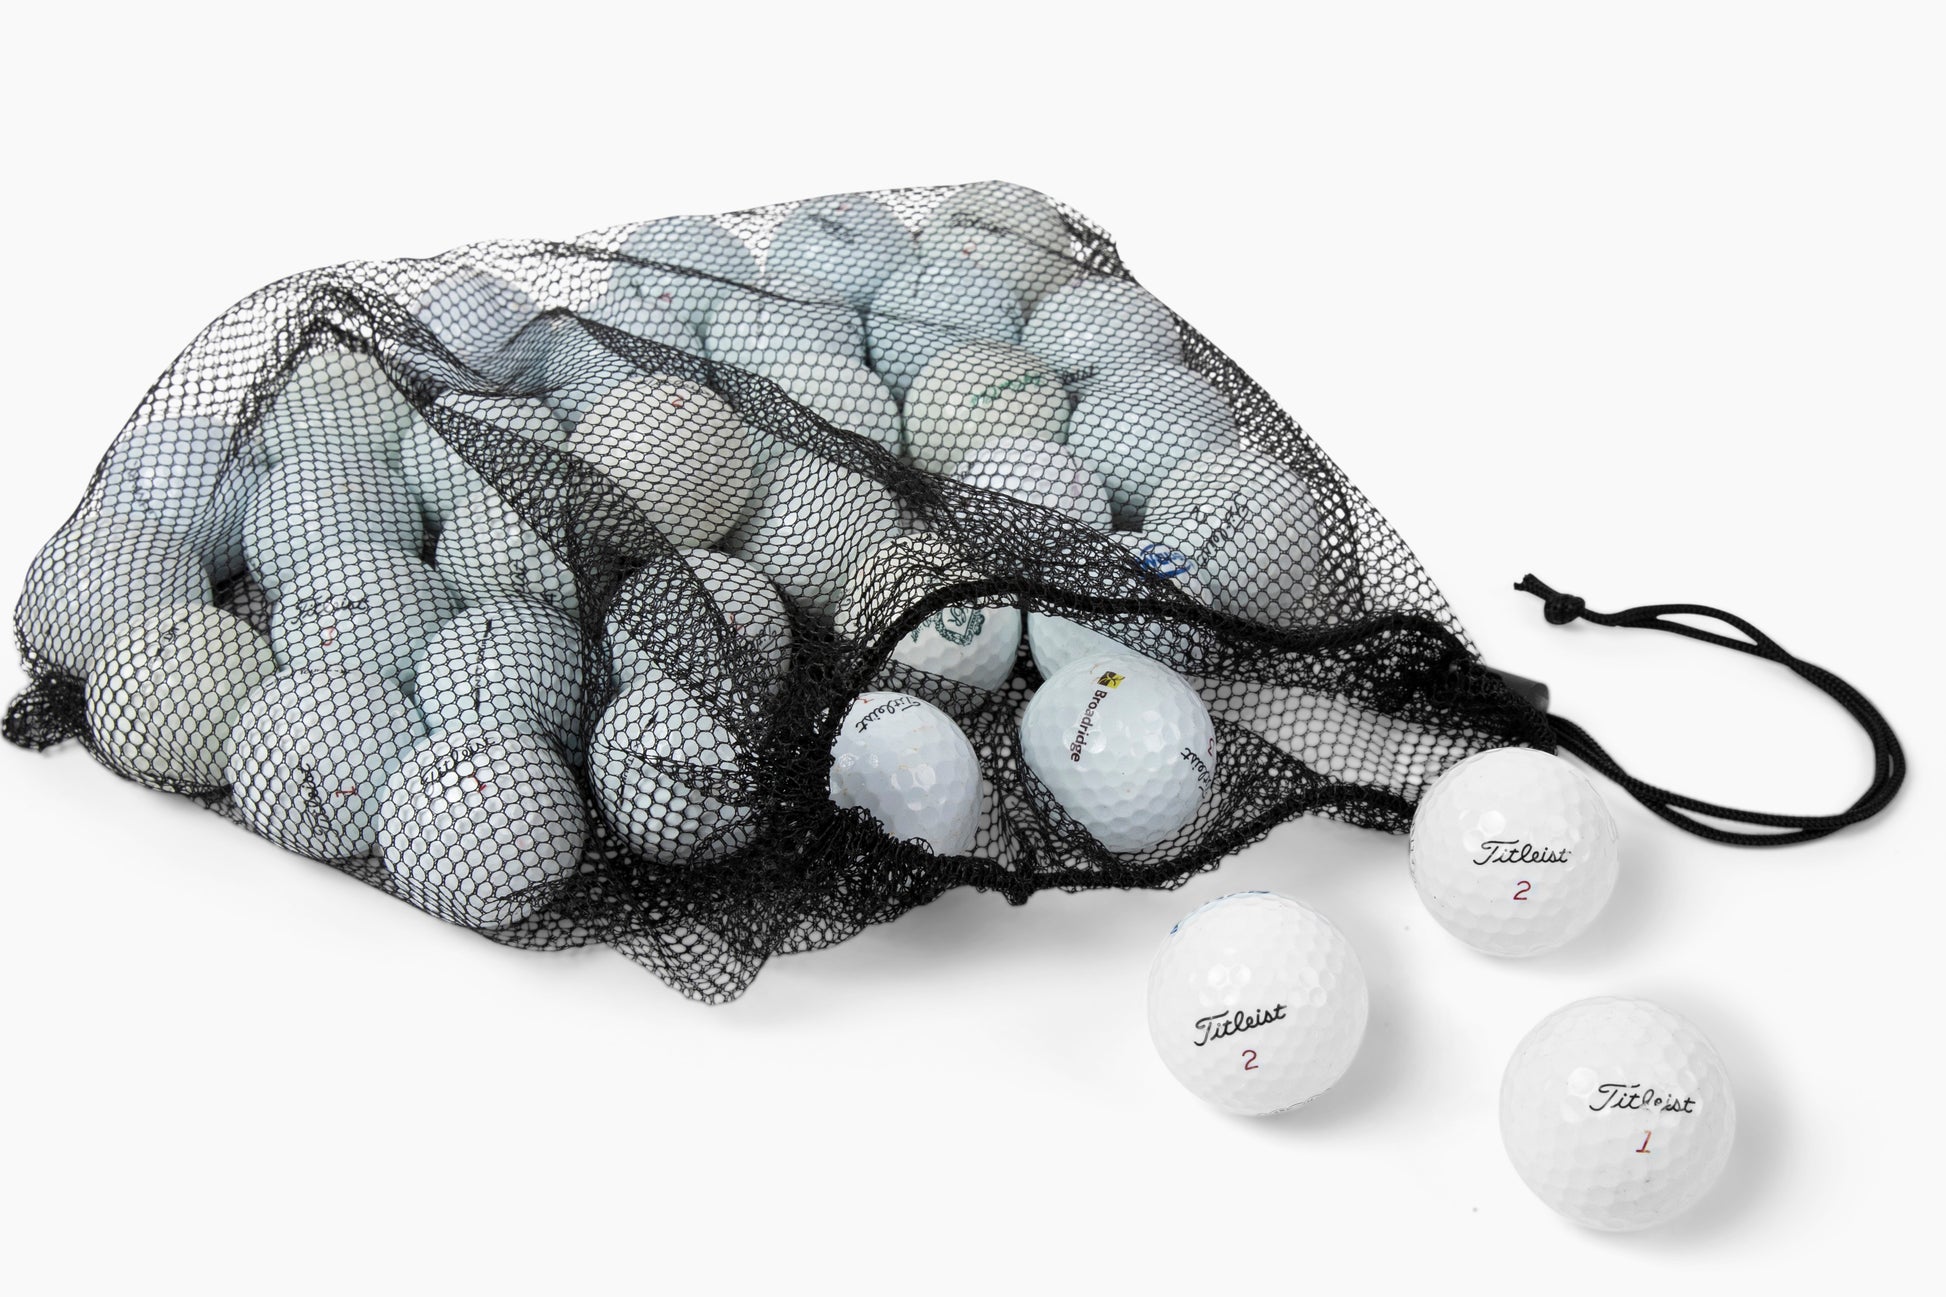 titleist nxt golf balls coming out of mesh bag